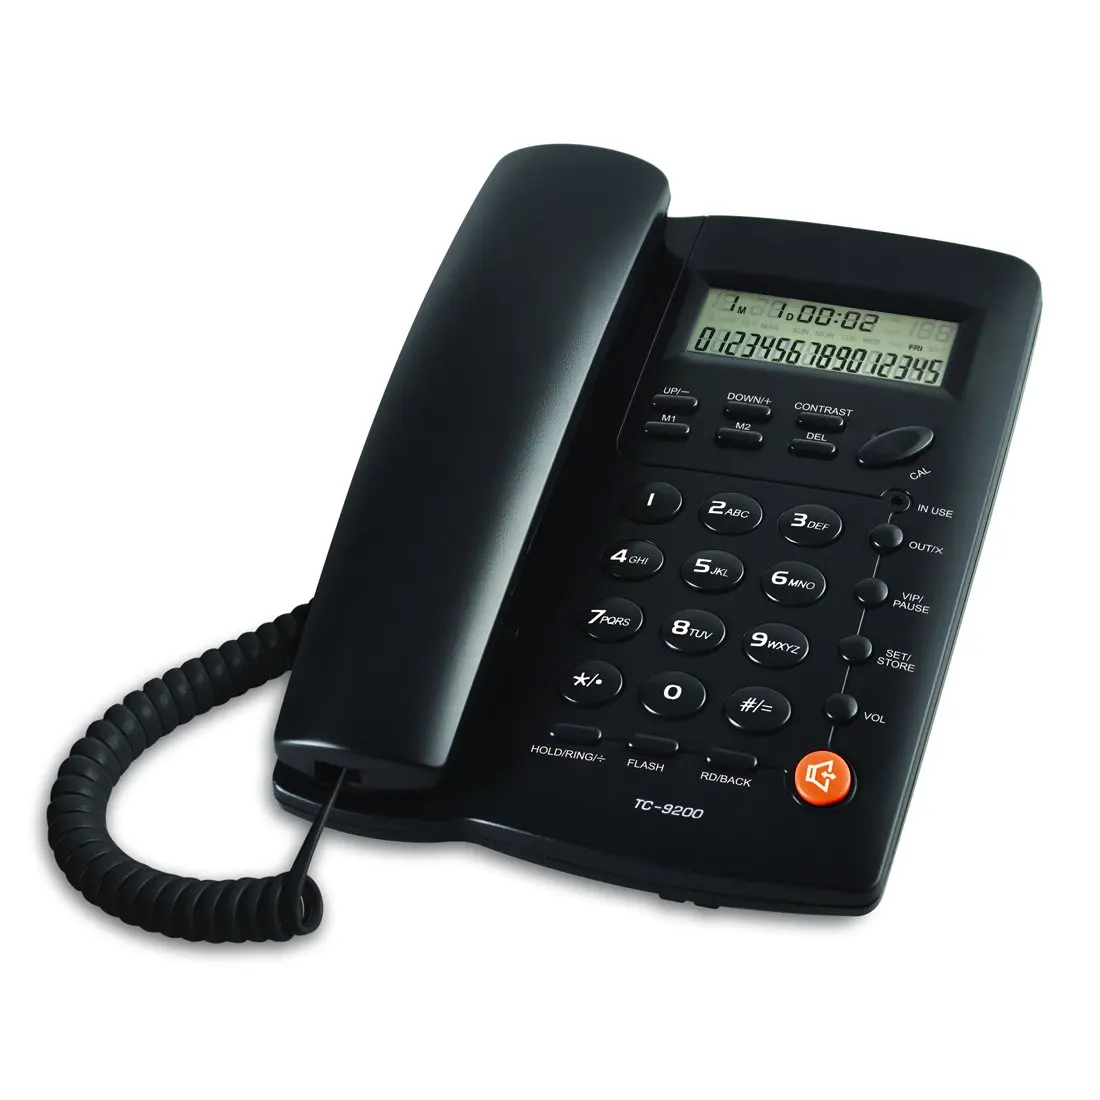 А51 телефон цена. TC 9200. Cyon телефон. Corded Phone.